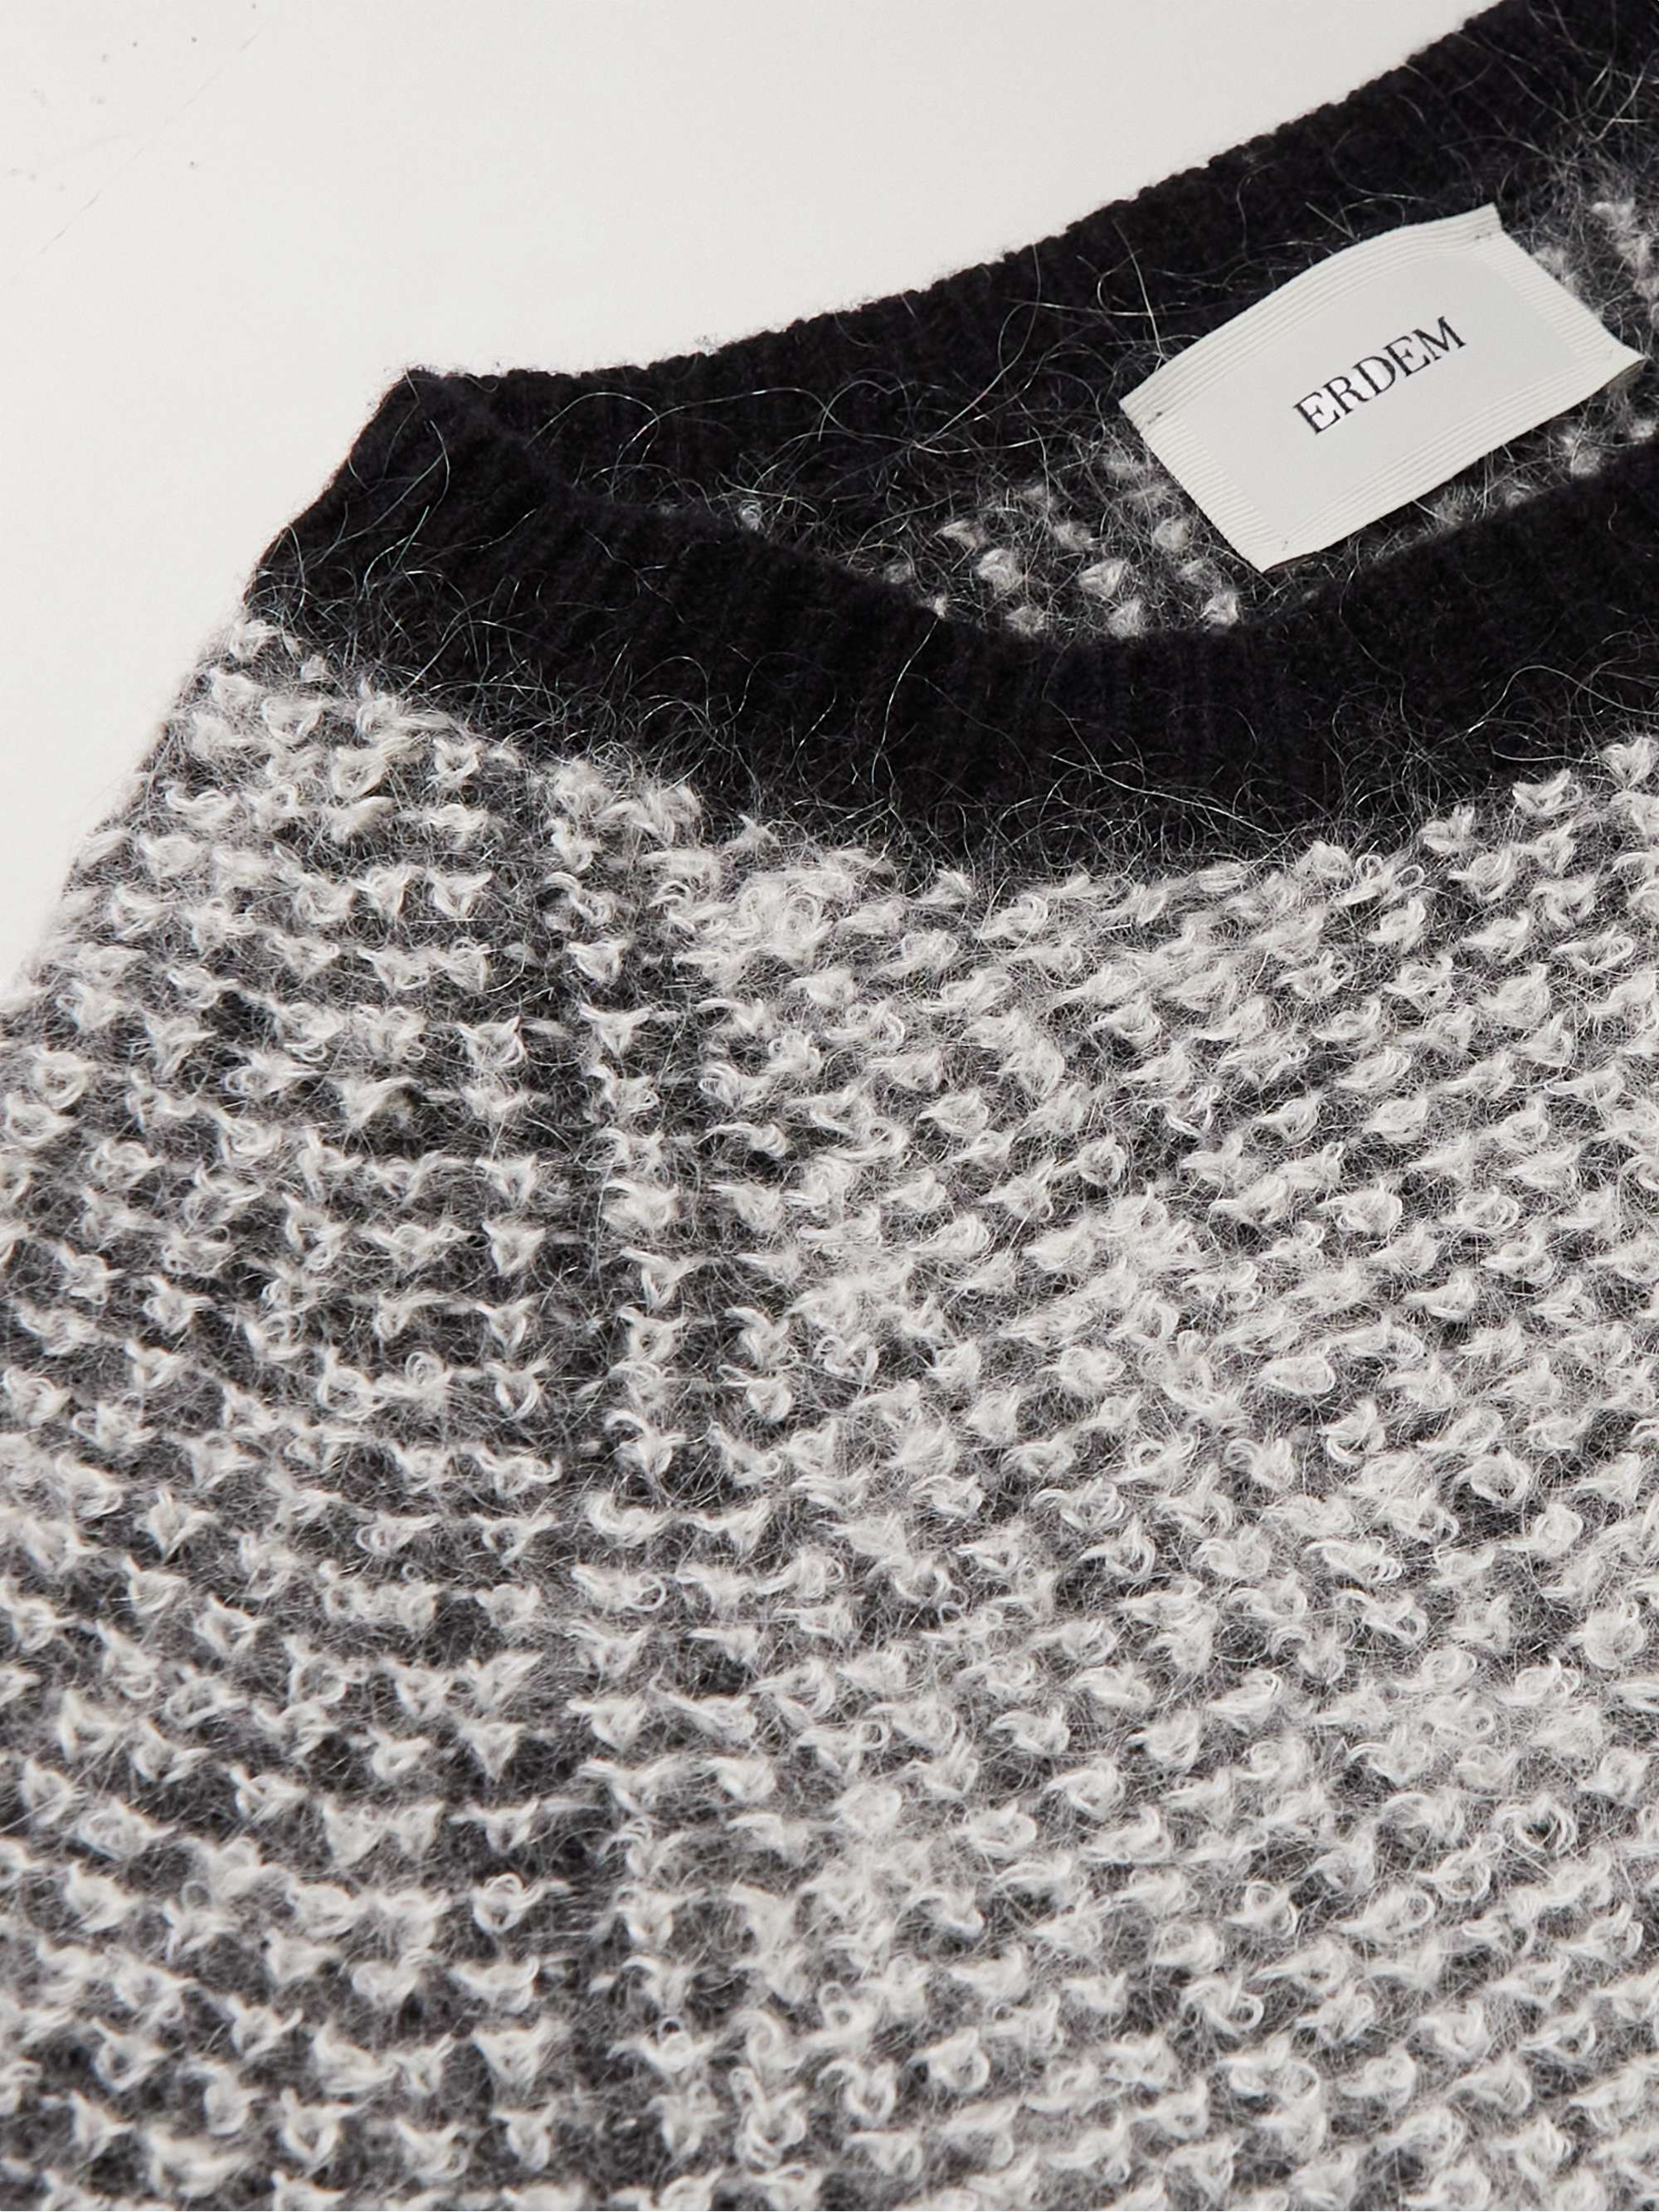 ERDEM Wool-Blend Sweater